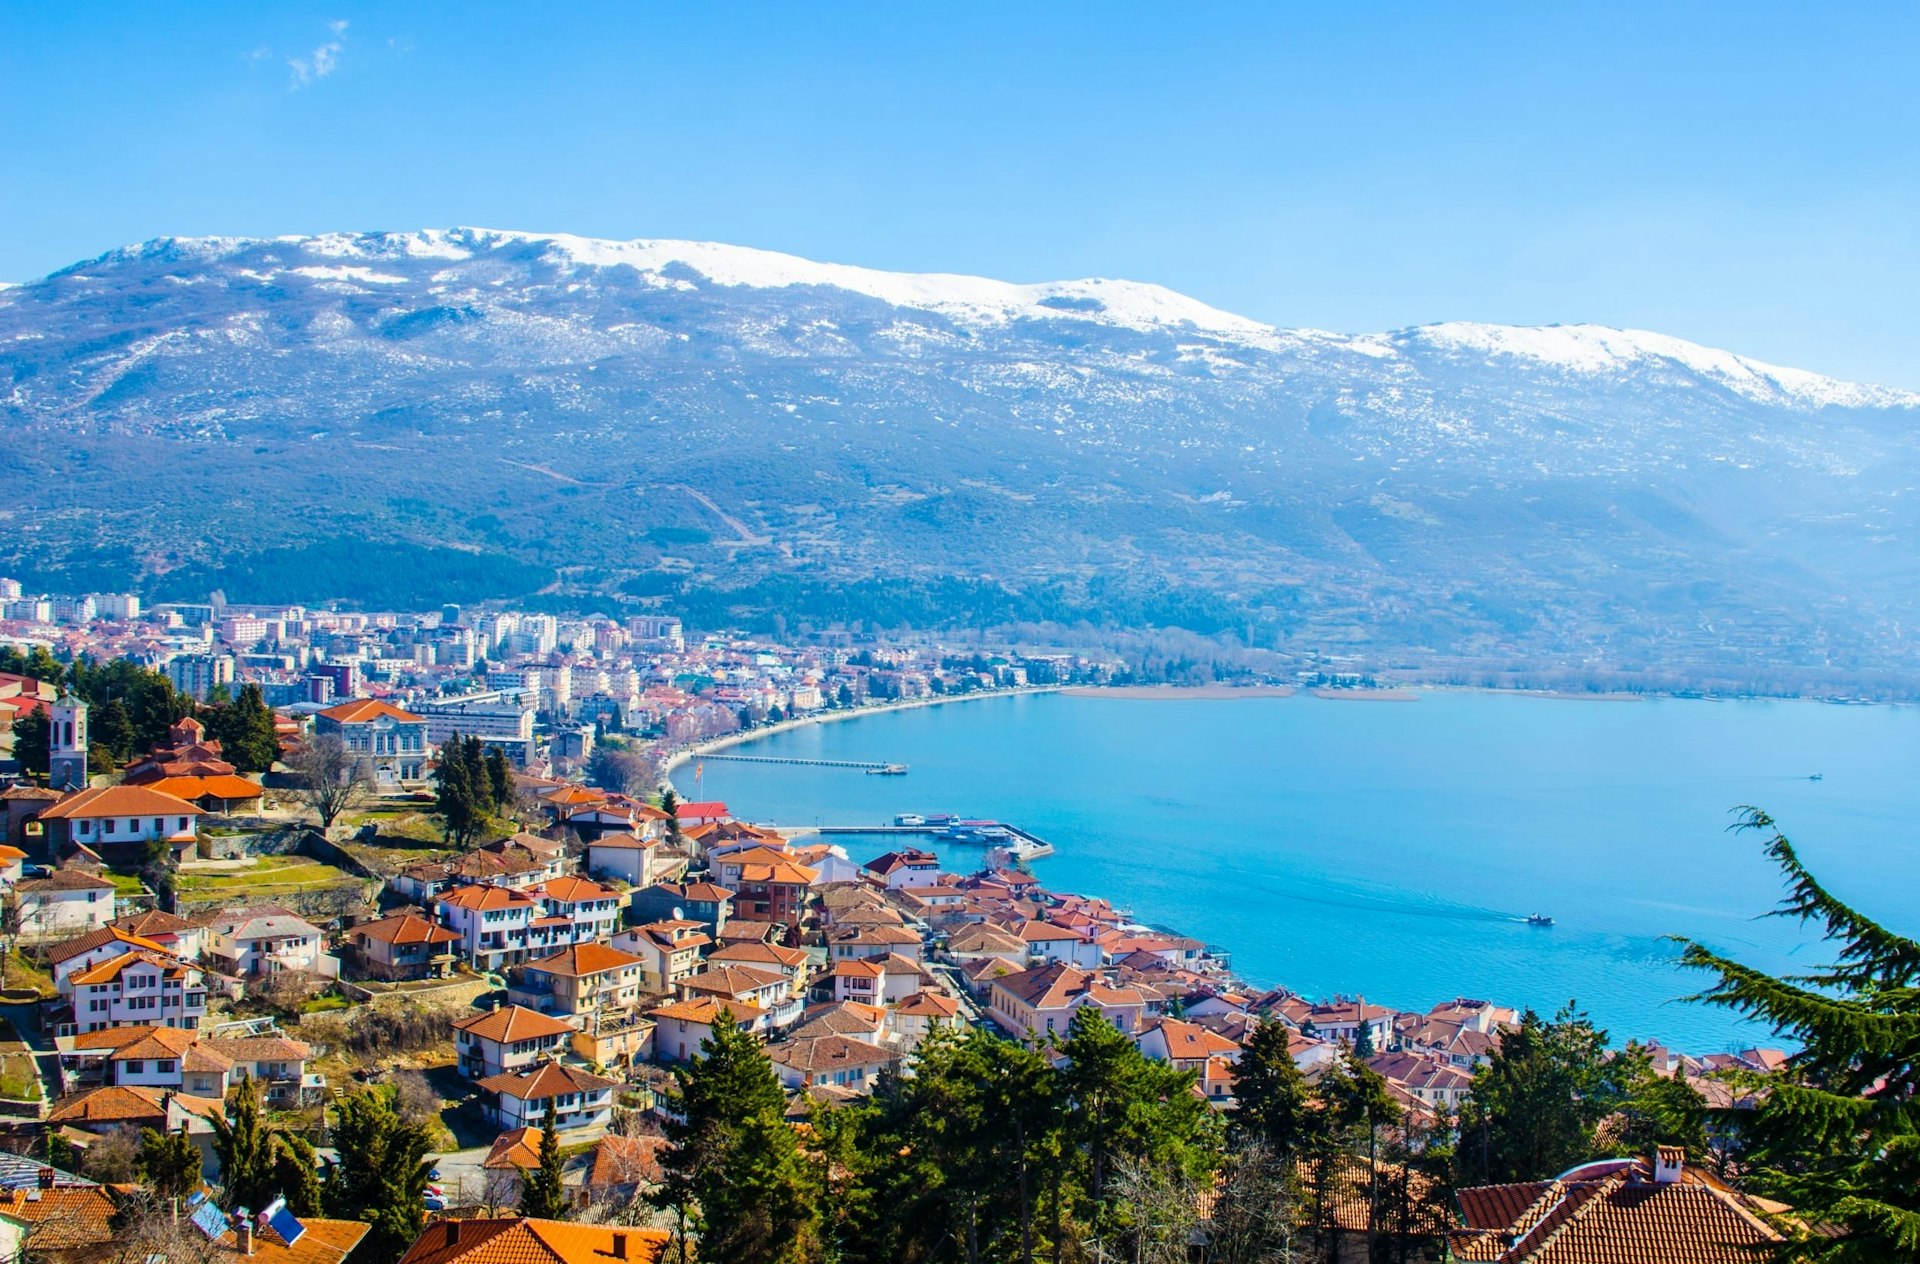 Ohrid in North Macedonia